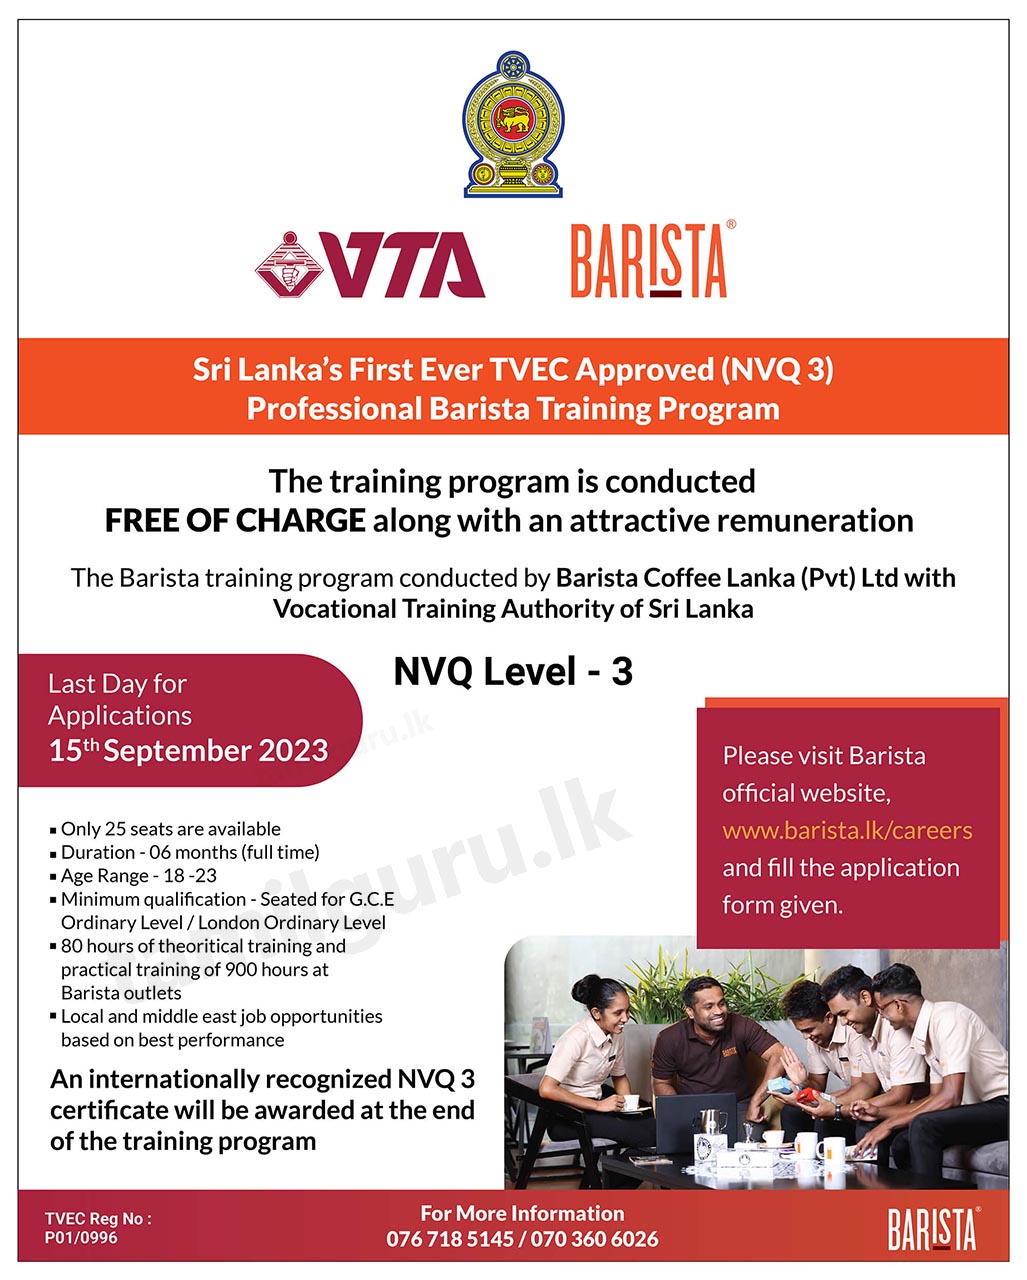 Professional Barista Training Program (Course) 2023 - VTA & Barista Coffe Lanka